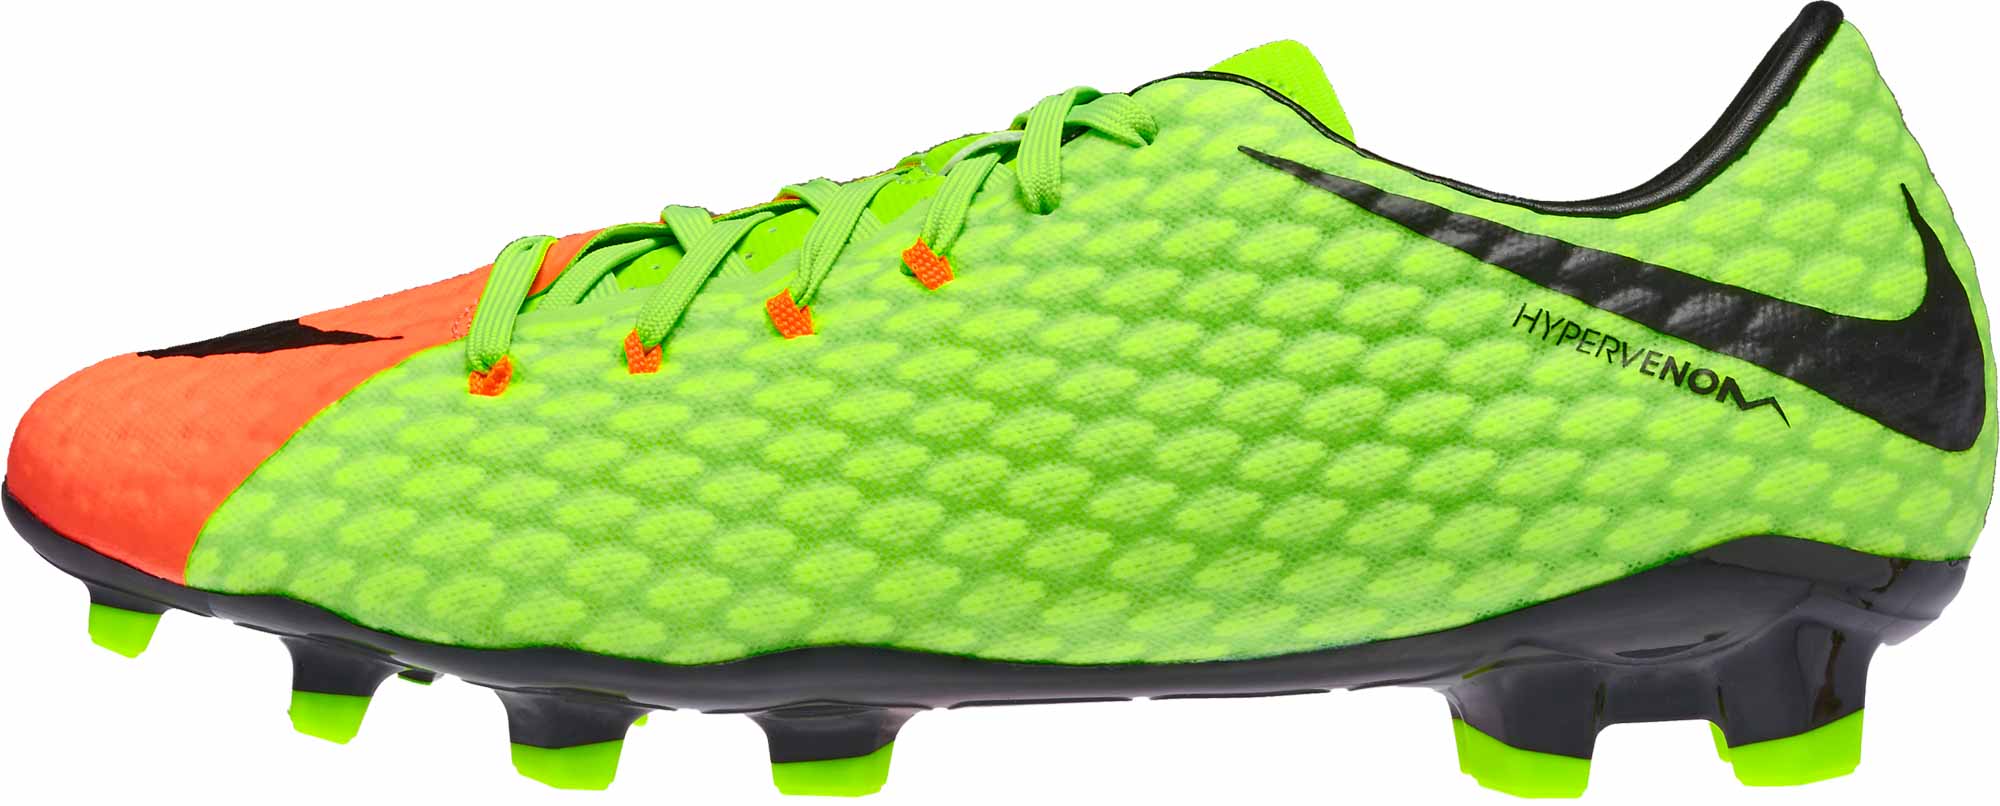 Geaccepteerd verkoopplan vanavond Nike Hypervenom Phelon III FG Soccer Cleats - Electric Green & Hyper Orange  - Soccer Master